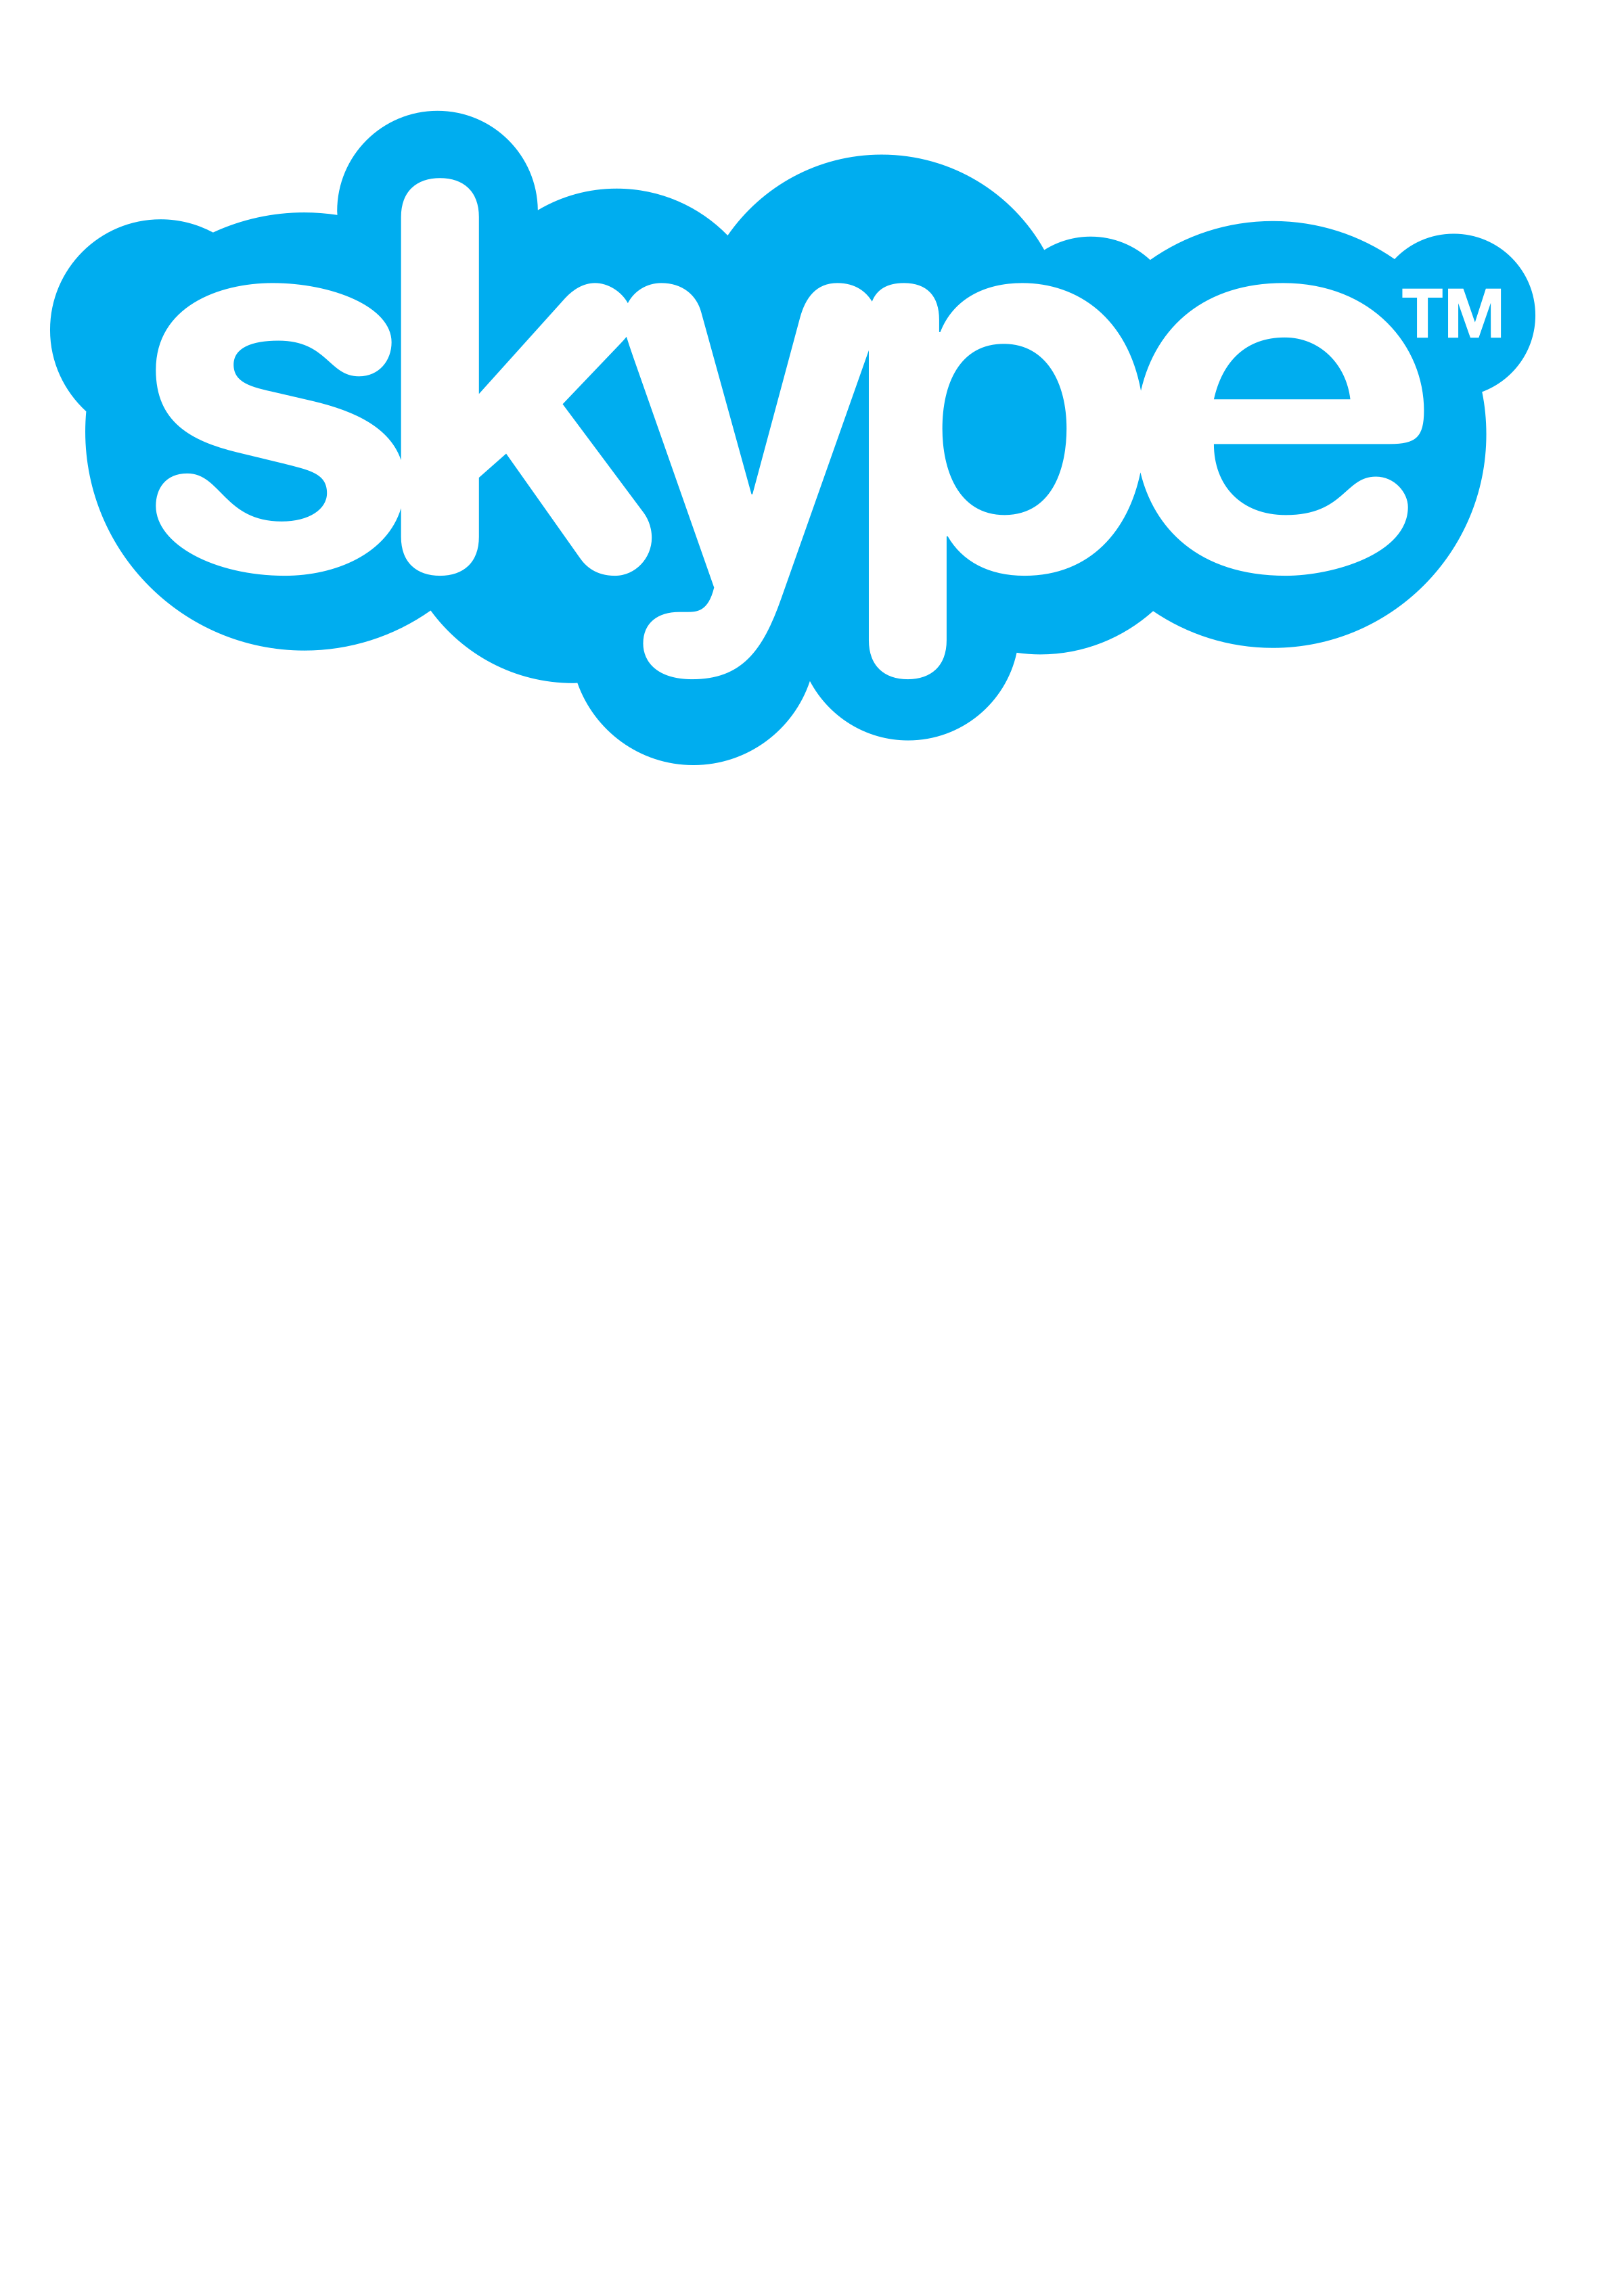 Skype Logo - Skype Logo PNG Transparent & SVG Vector - Freebie Supply